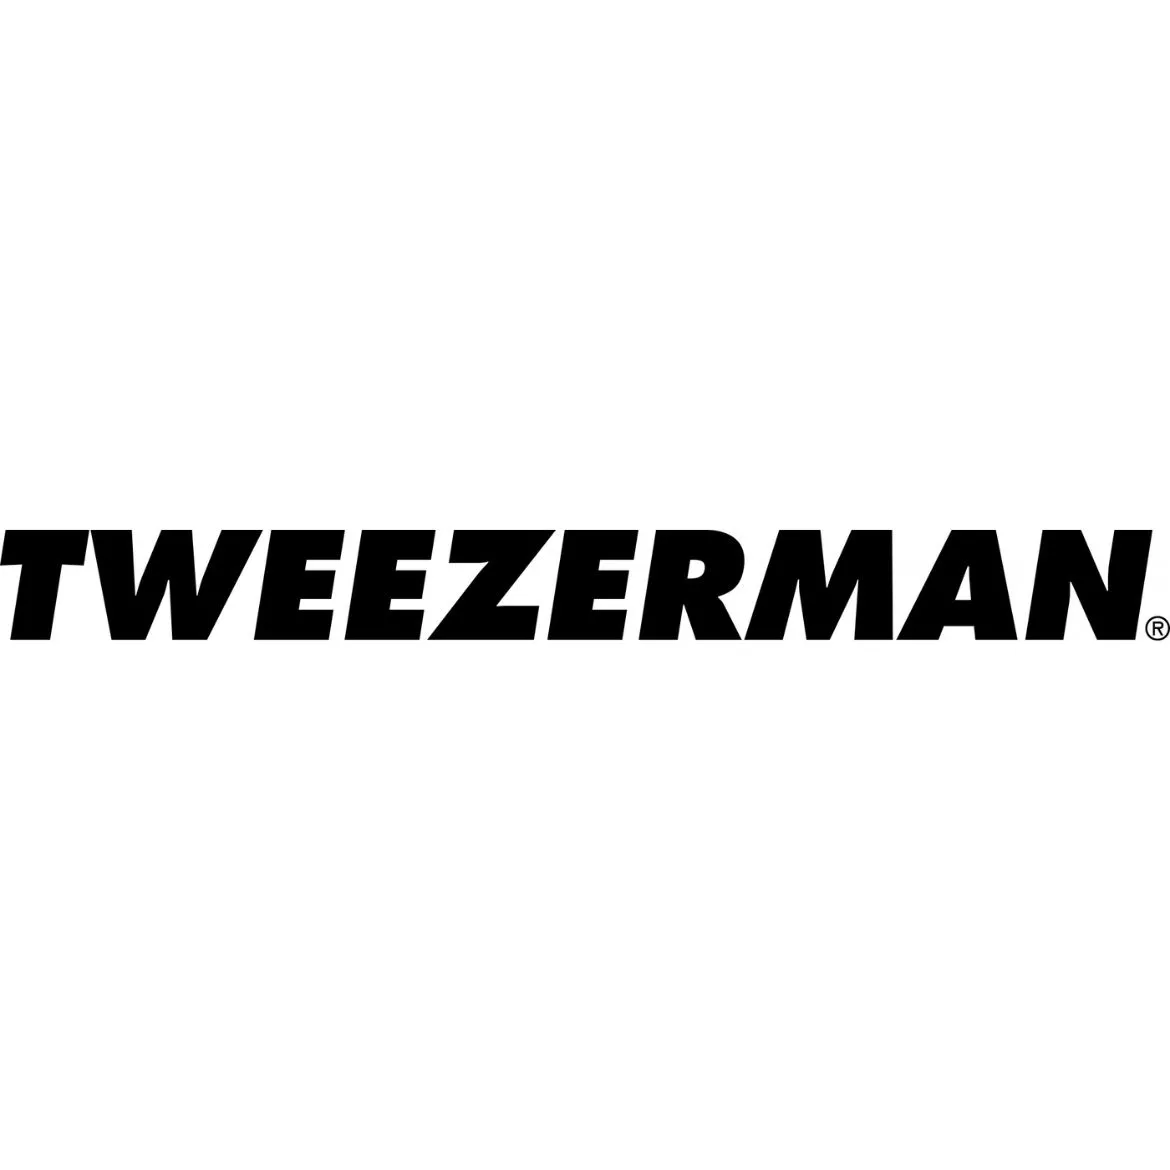 Tweezerman Professional